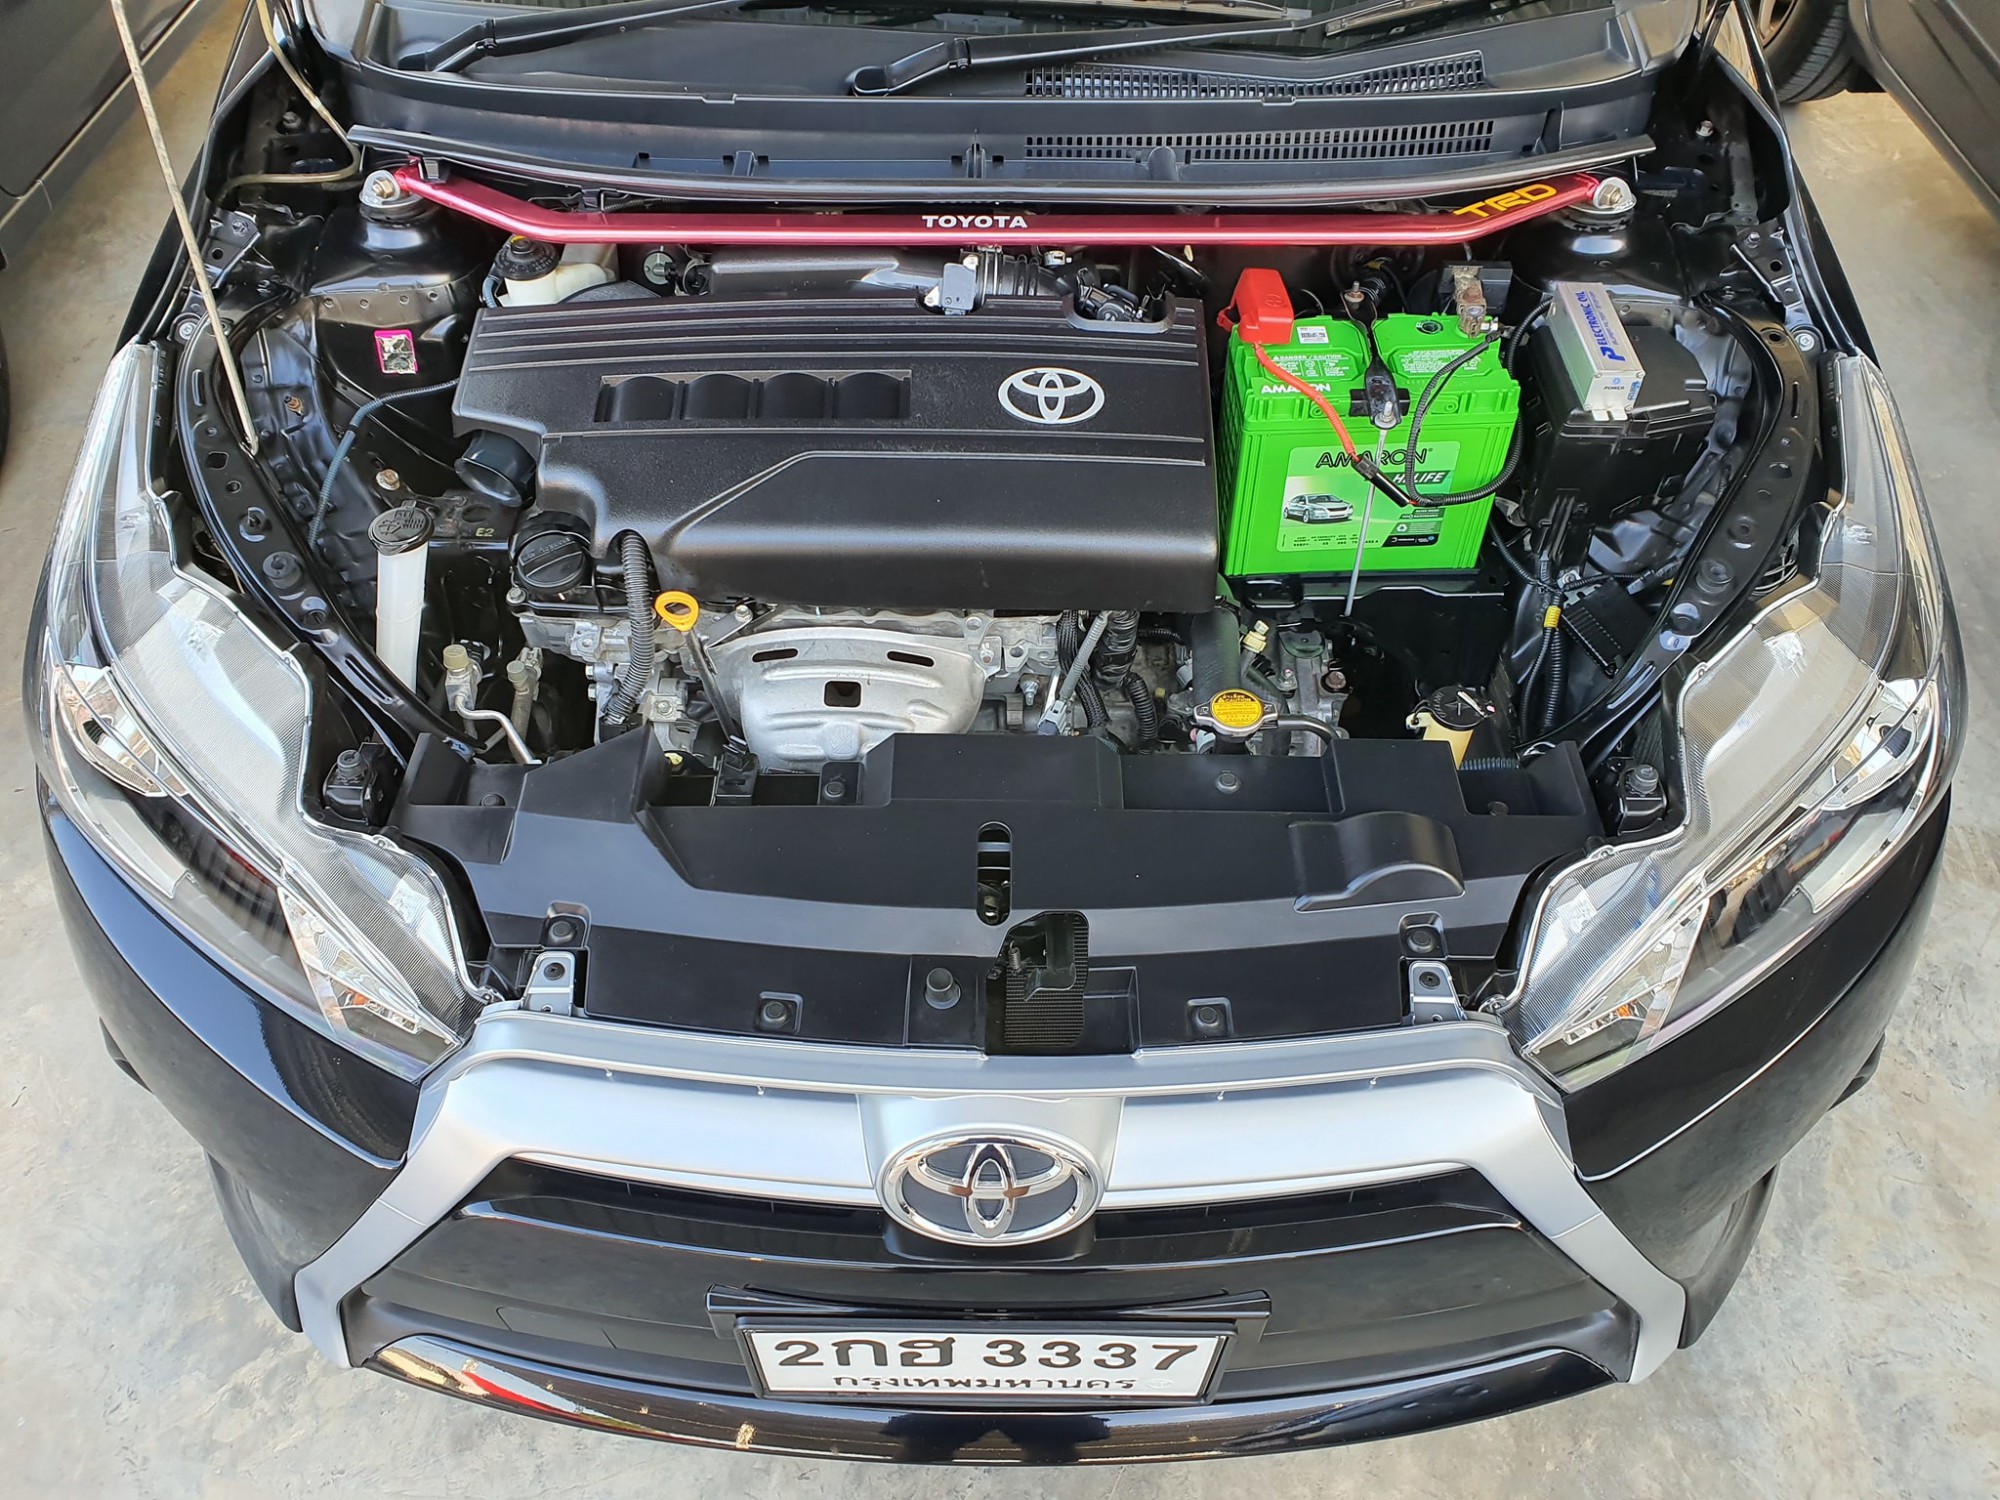 Toyota Yaris ปี 2014 สีดำ